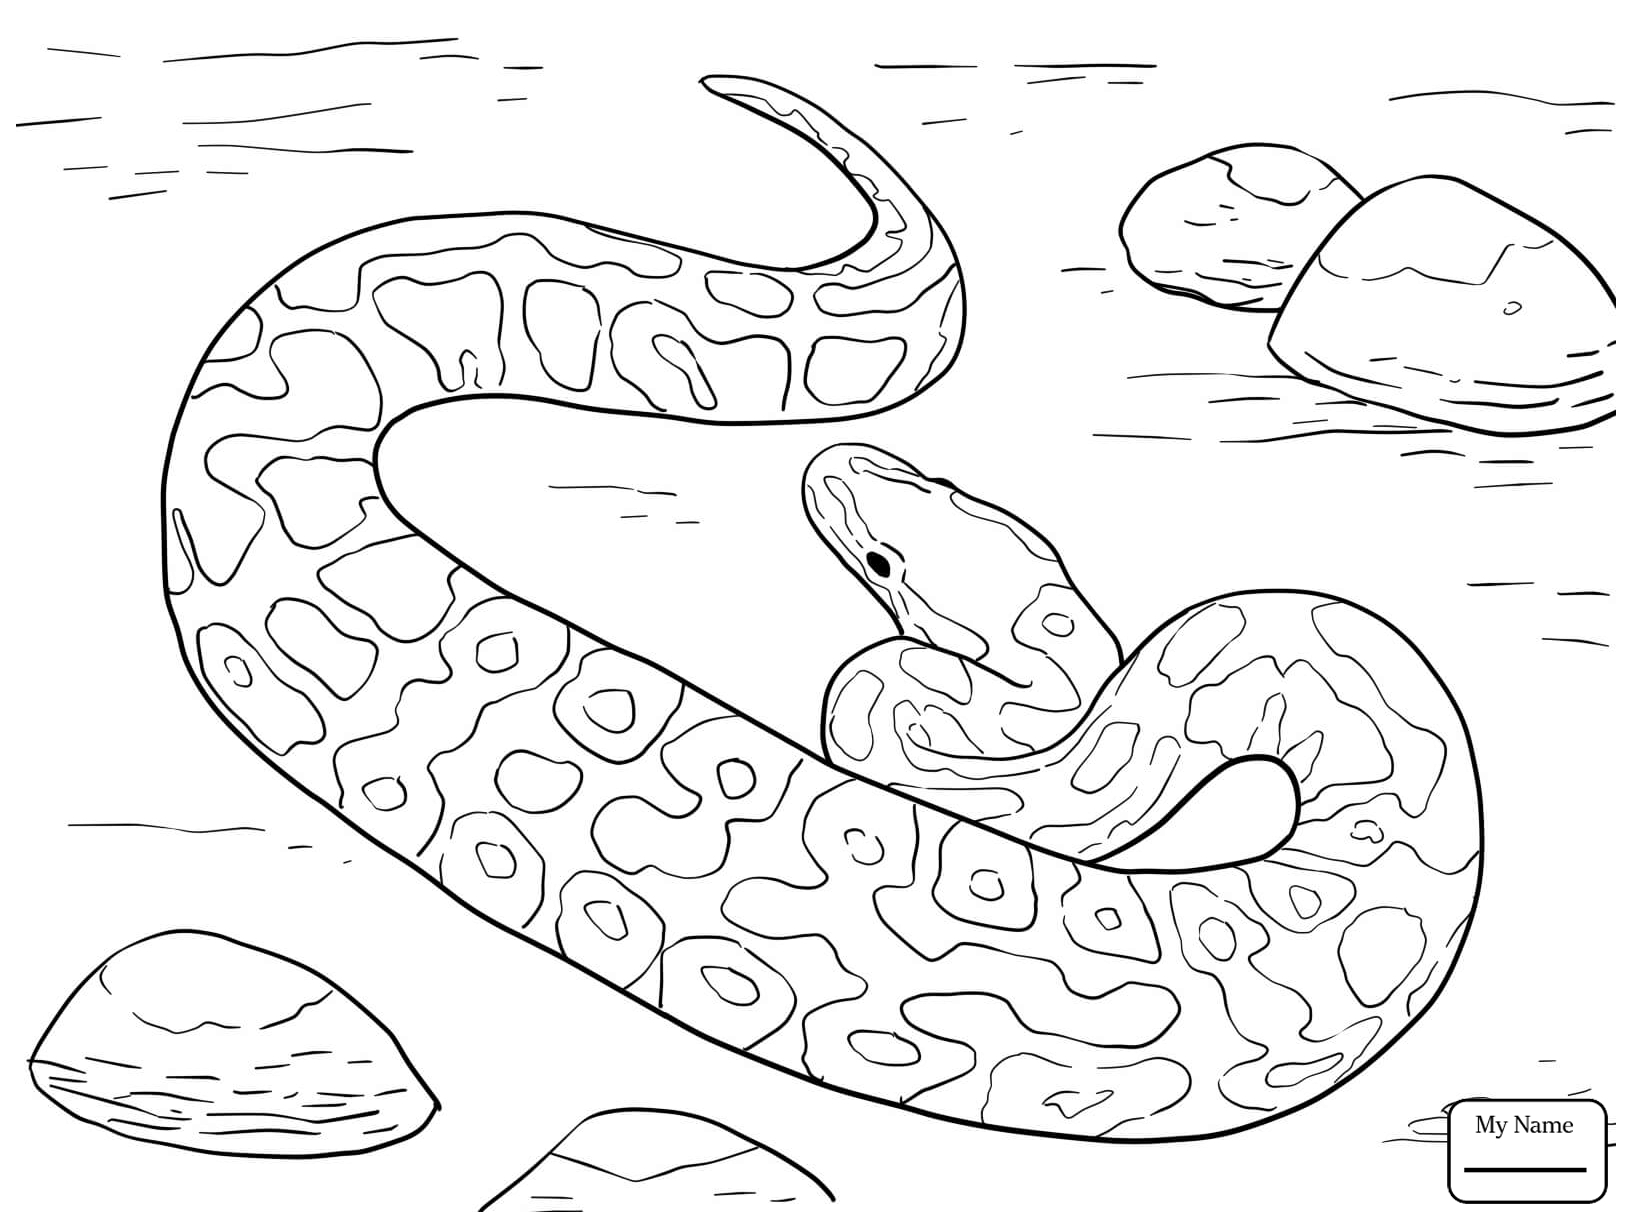 ball-python-drawing-at-getdrawings-free-download